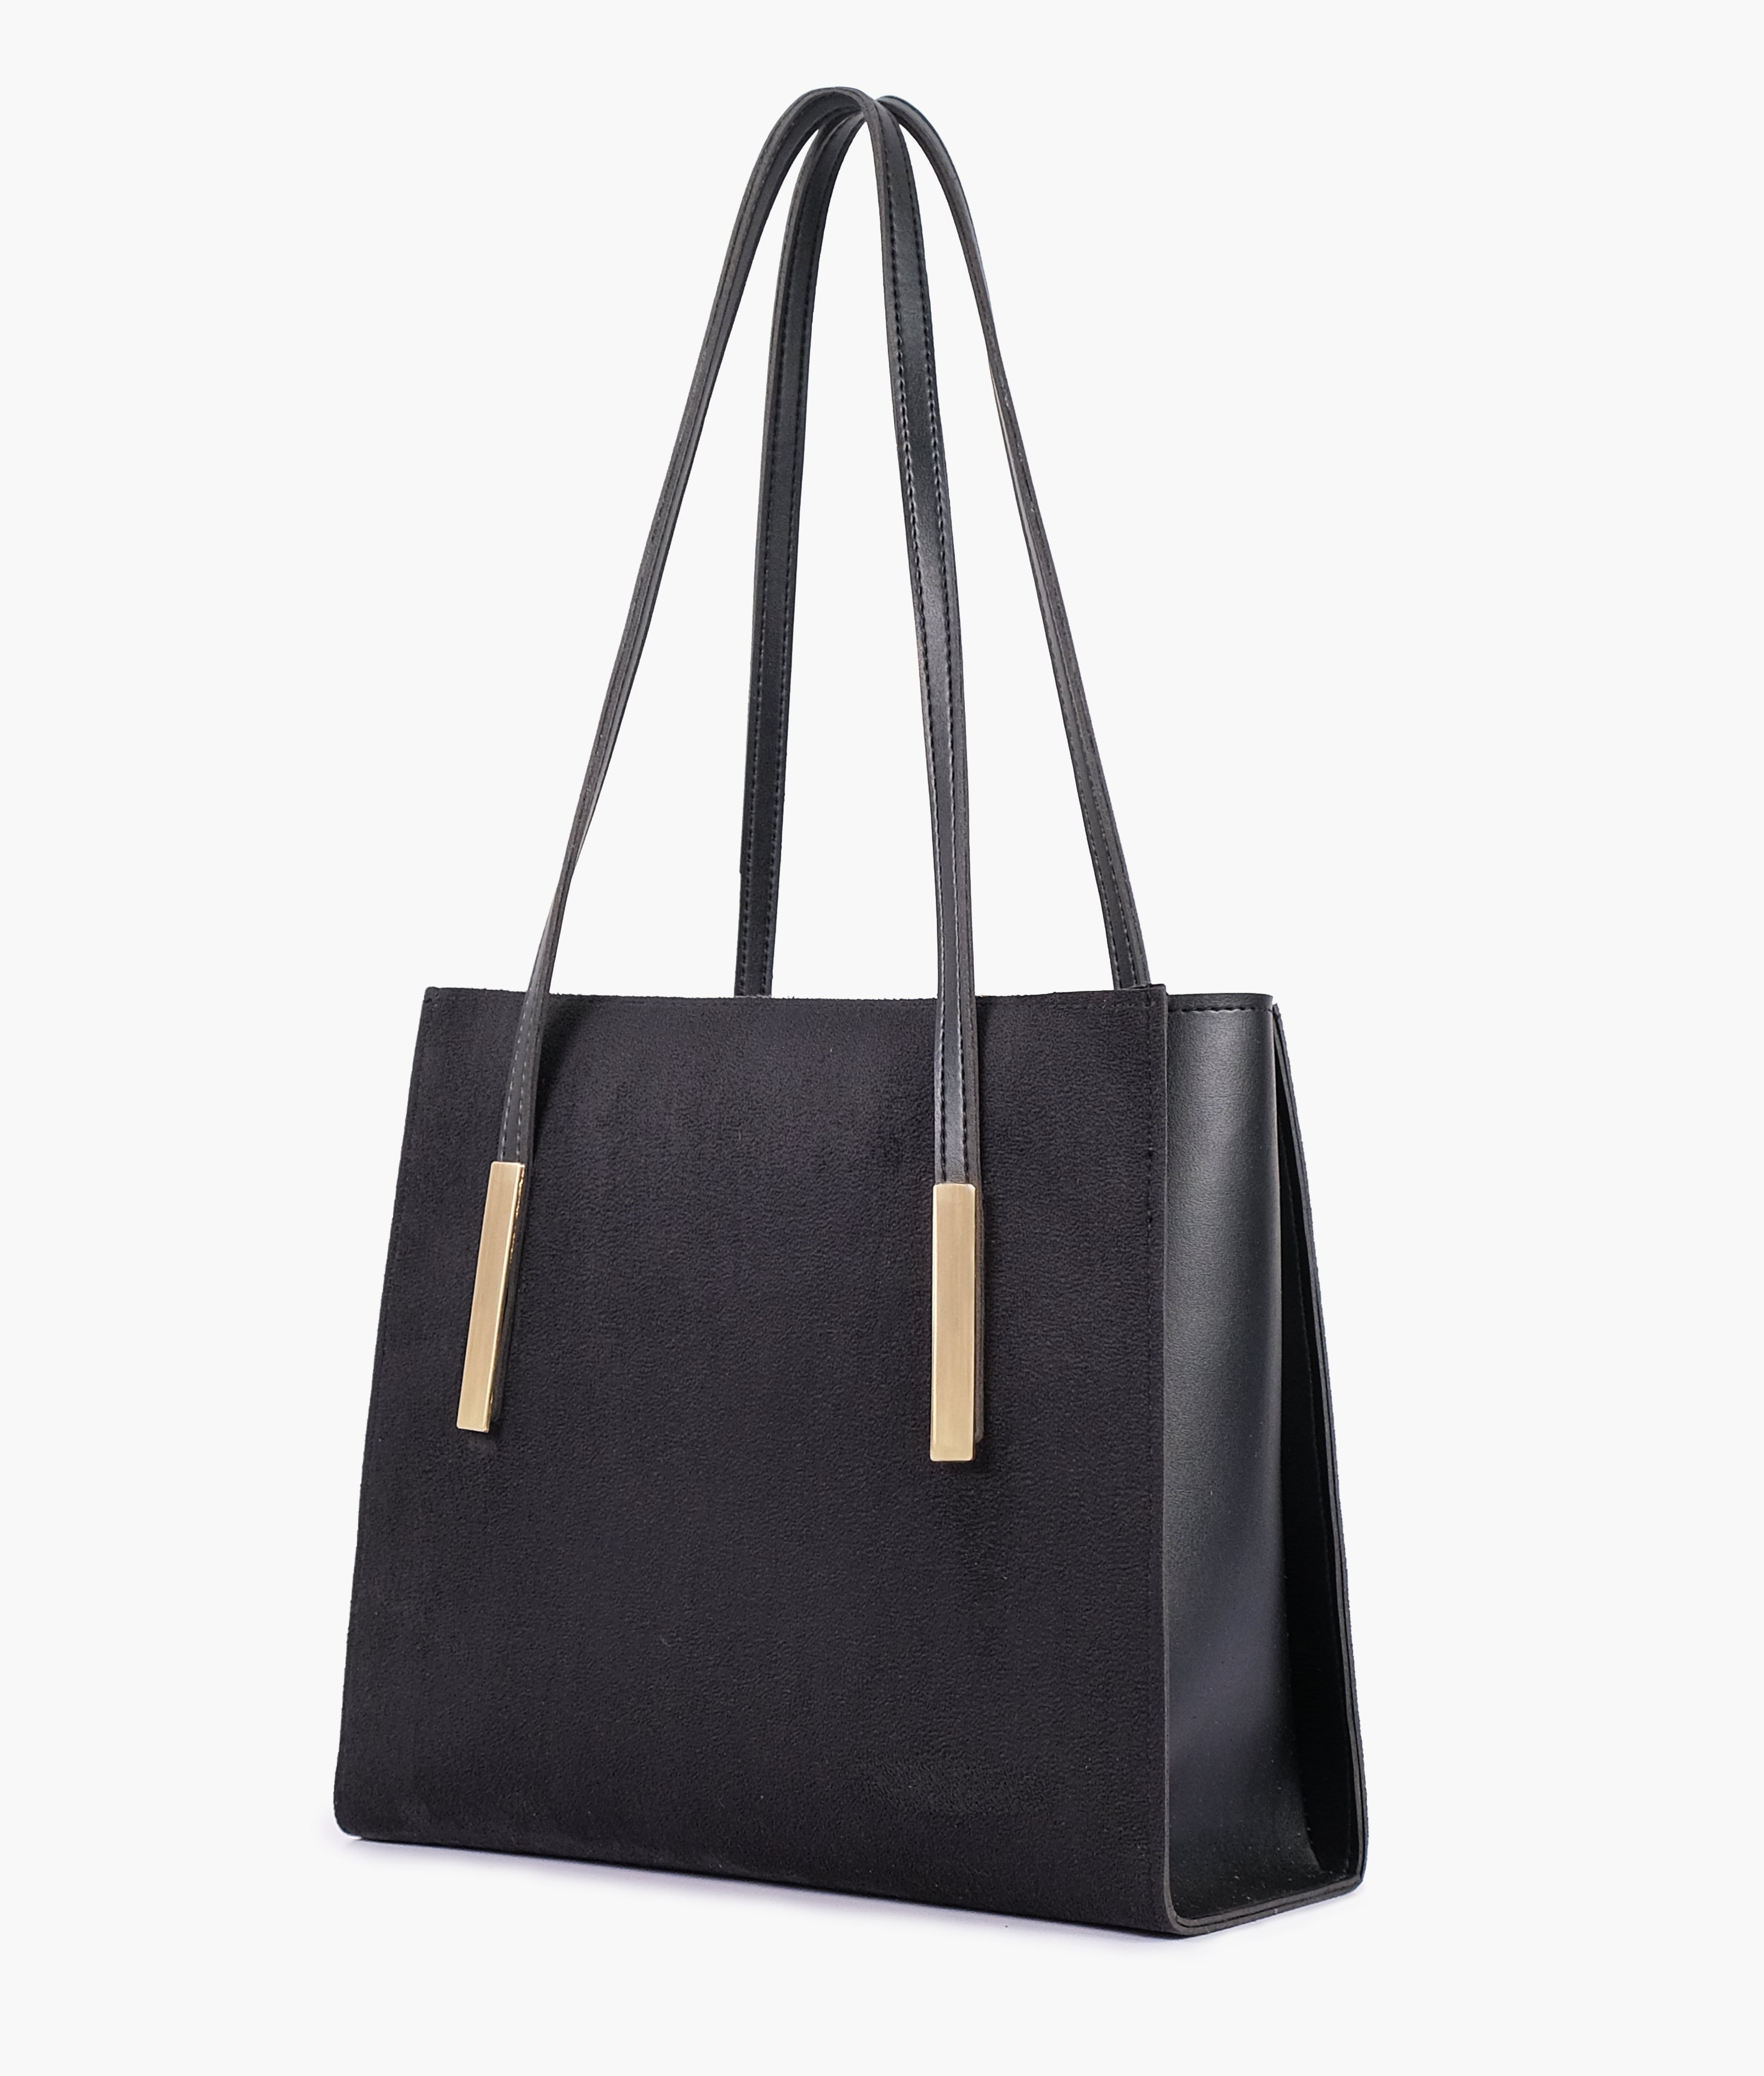 Black suede zipper shoulder bag with long handle